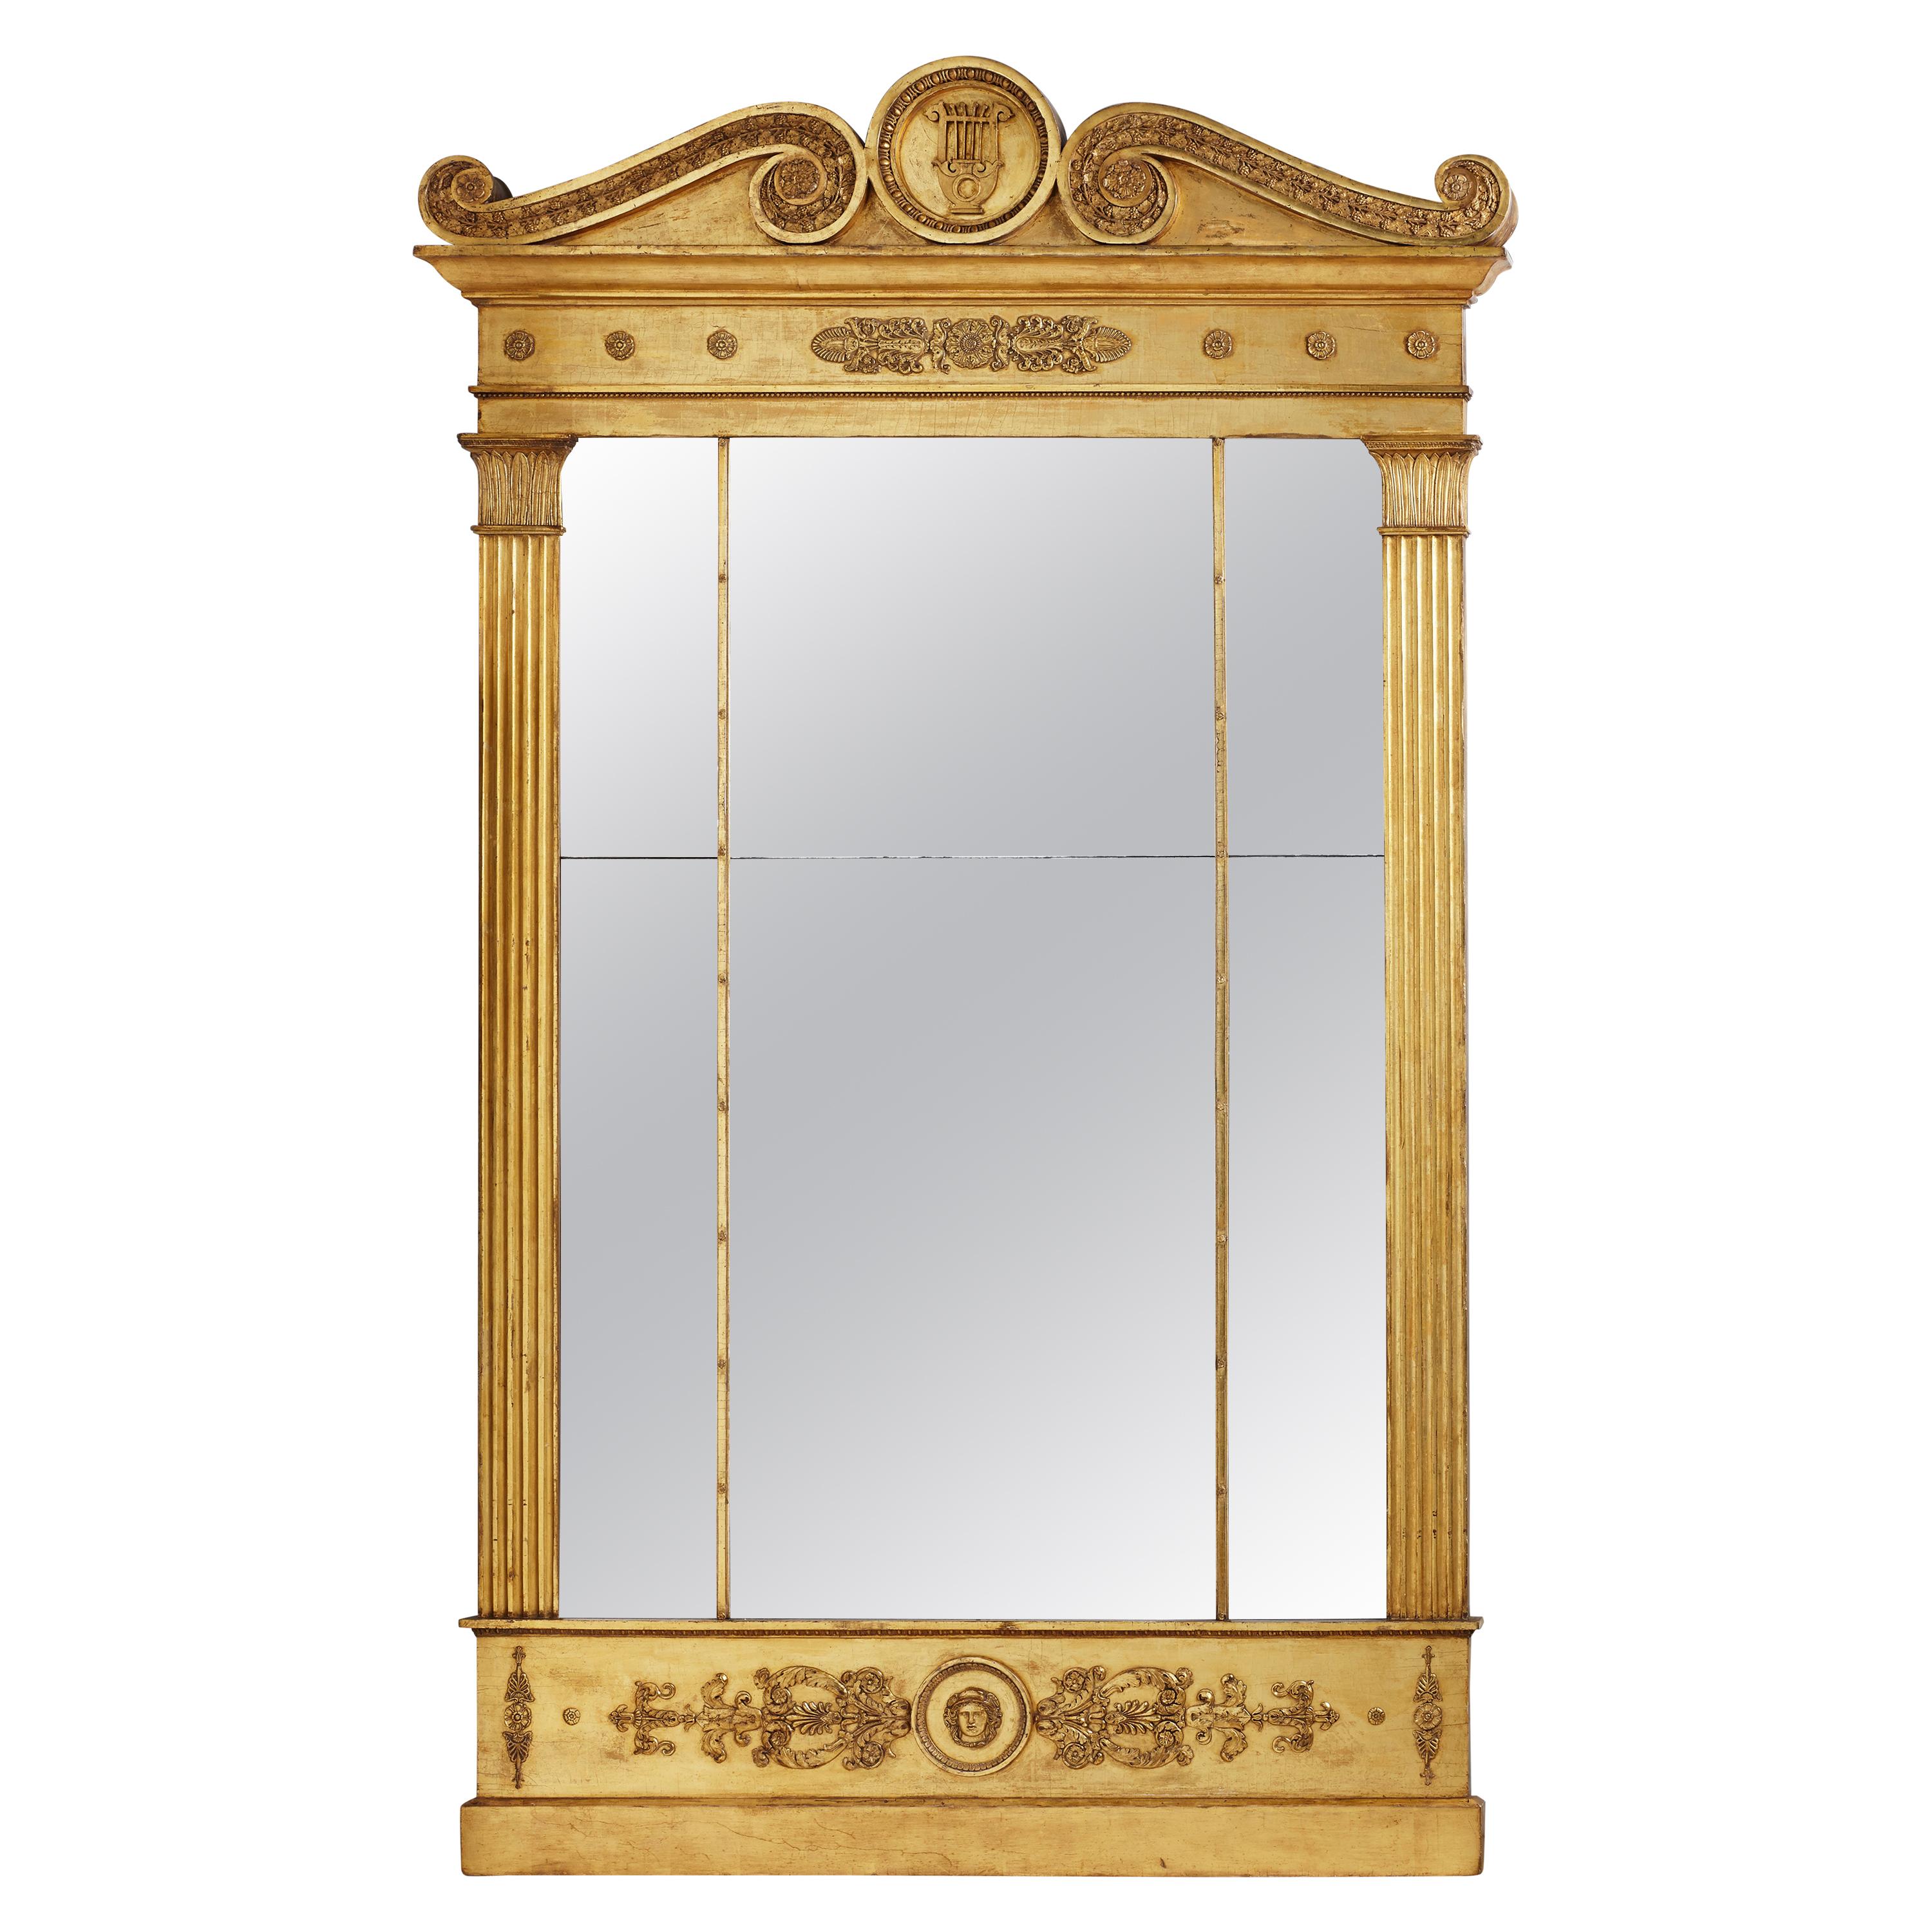 Impressive Royal Early 19th Century German Empire Mirror